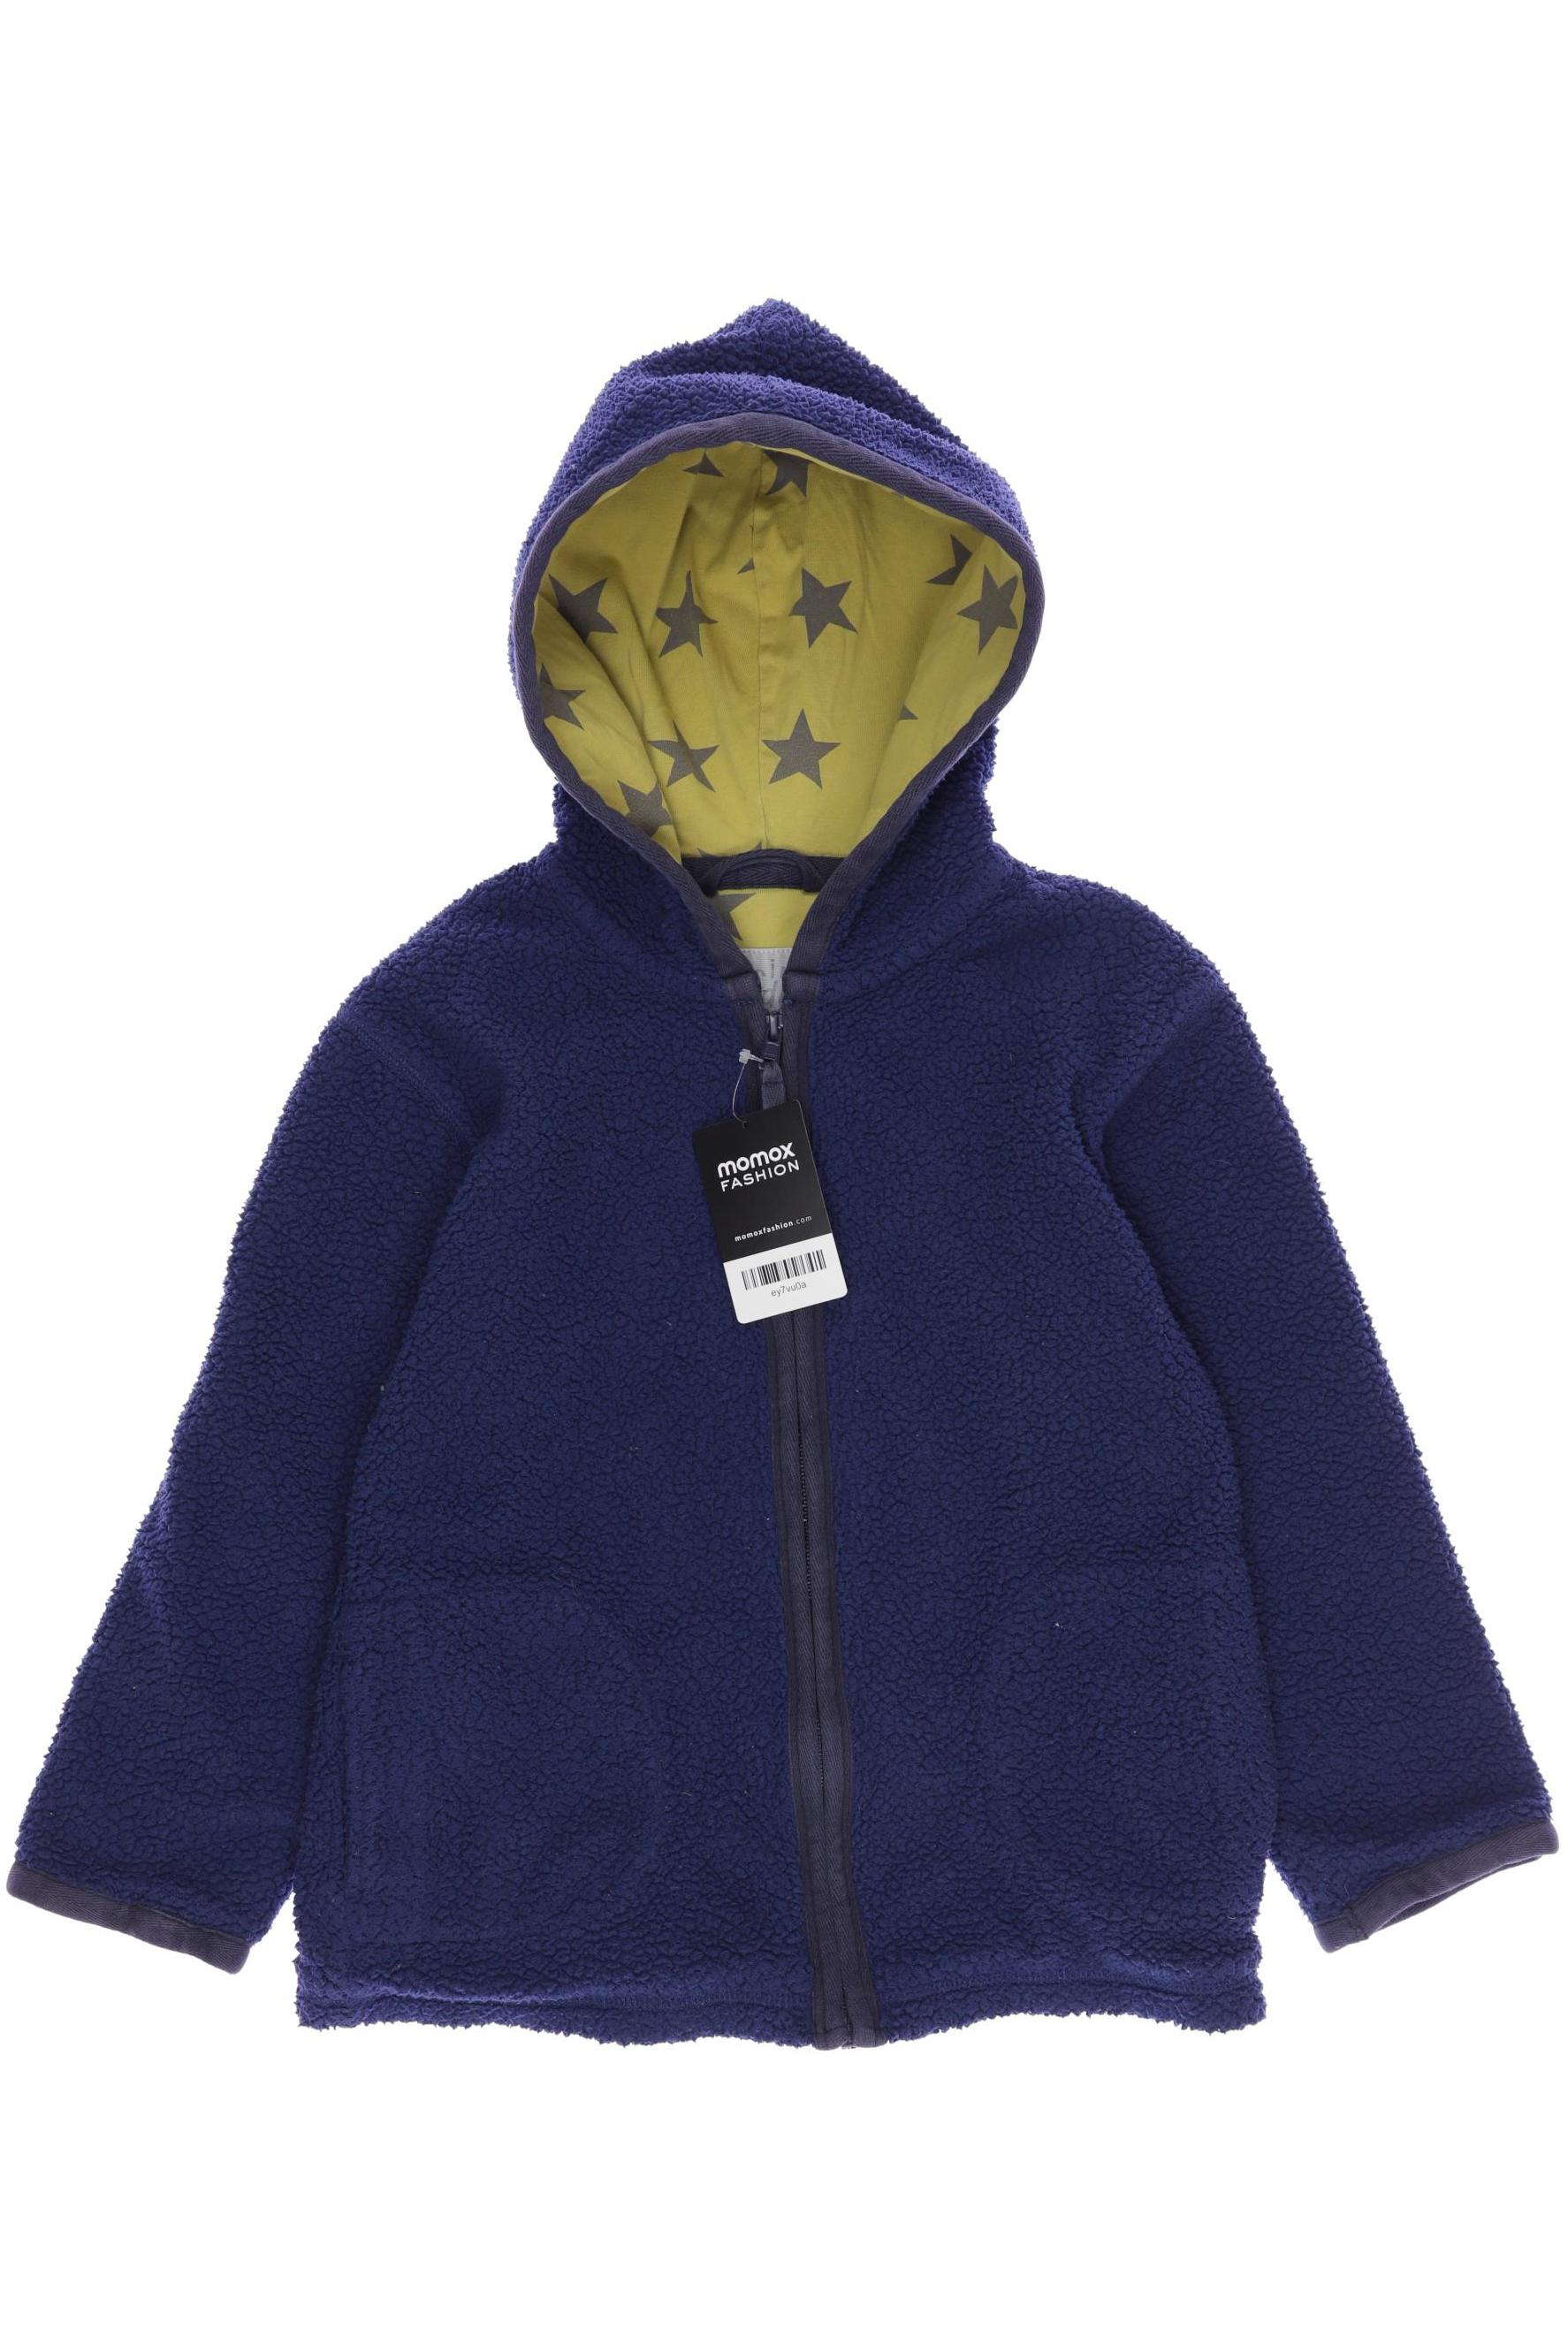 Mini Boden Herren Hoodies & Sweater, marineblau, Gr. 128 von Mini Boden